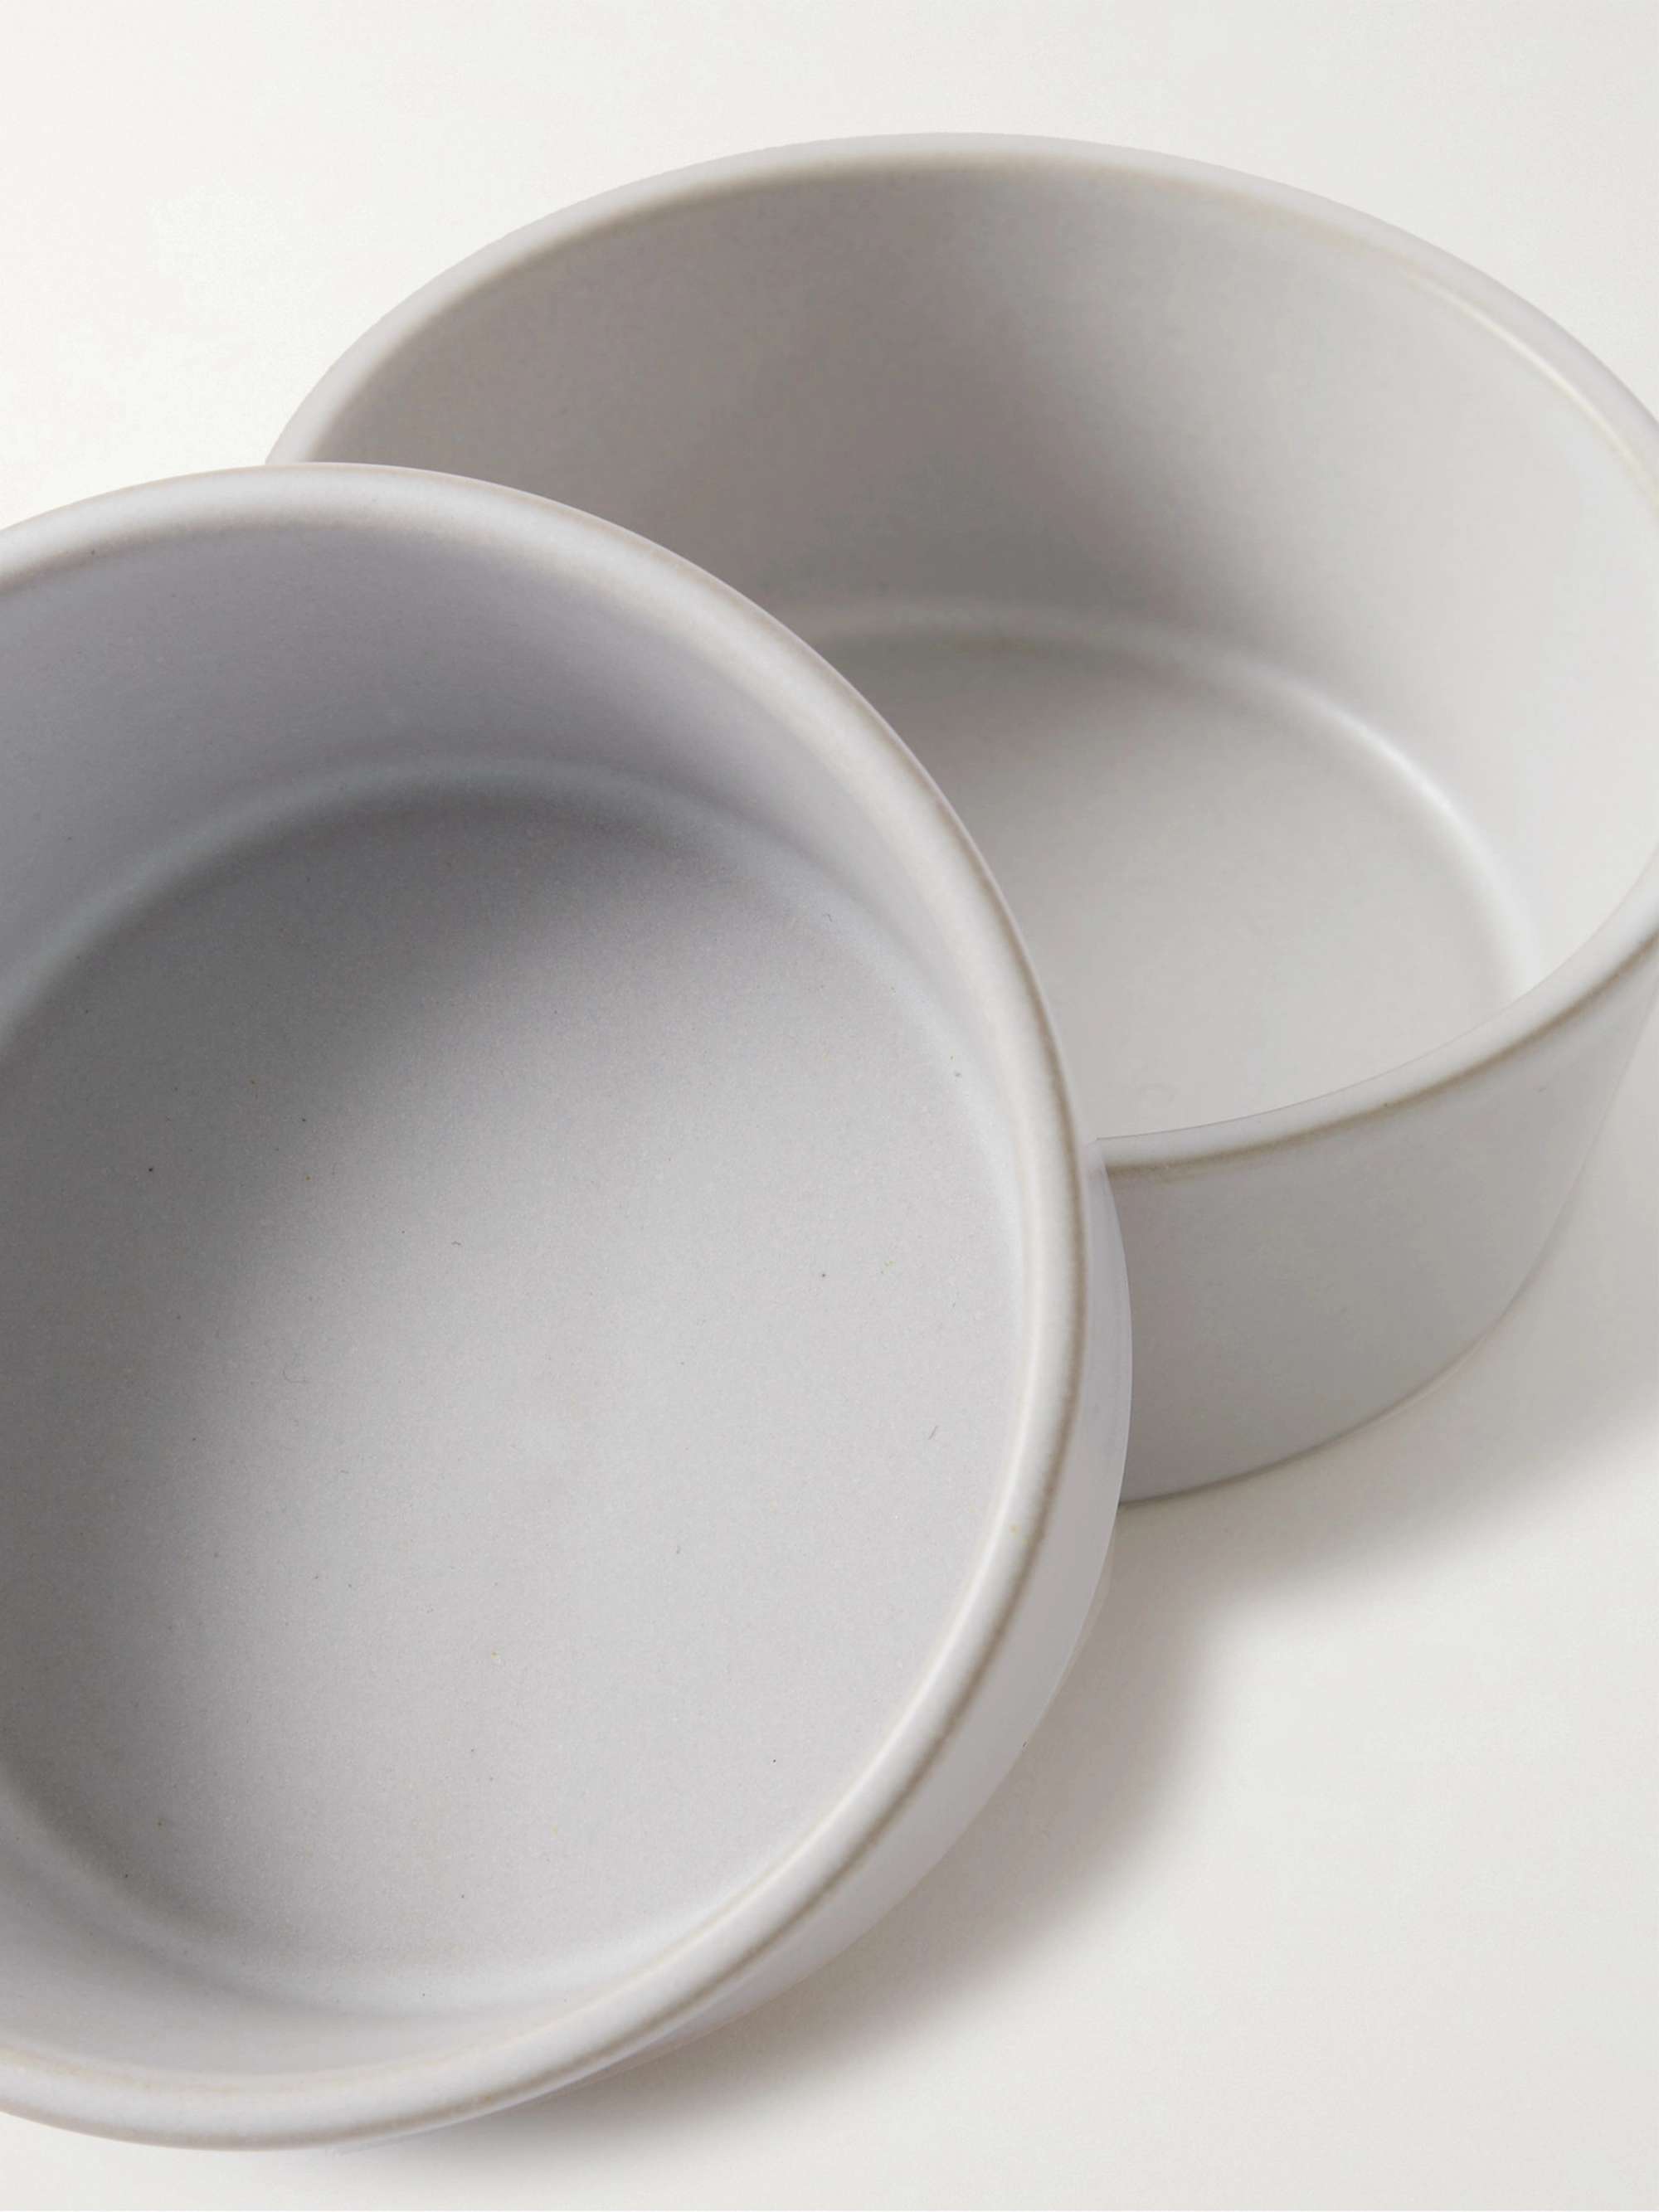 BY JAPAN + SyuRo Set of Two Medium Glazed Ceramic Bowls